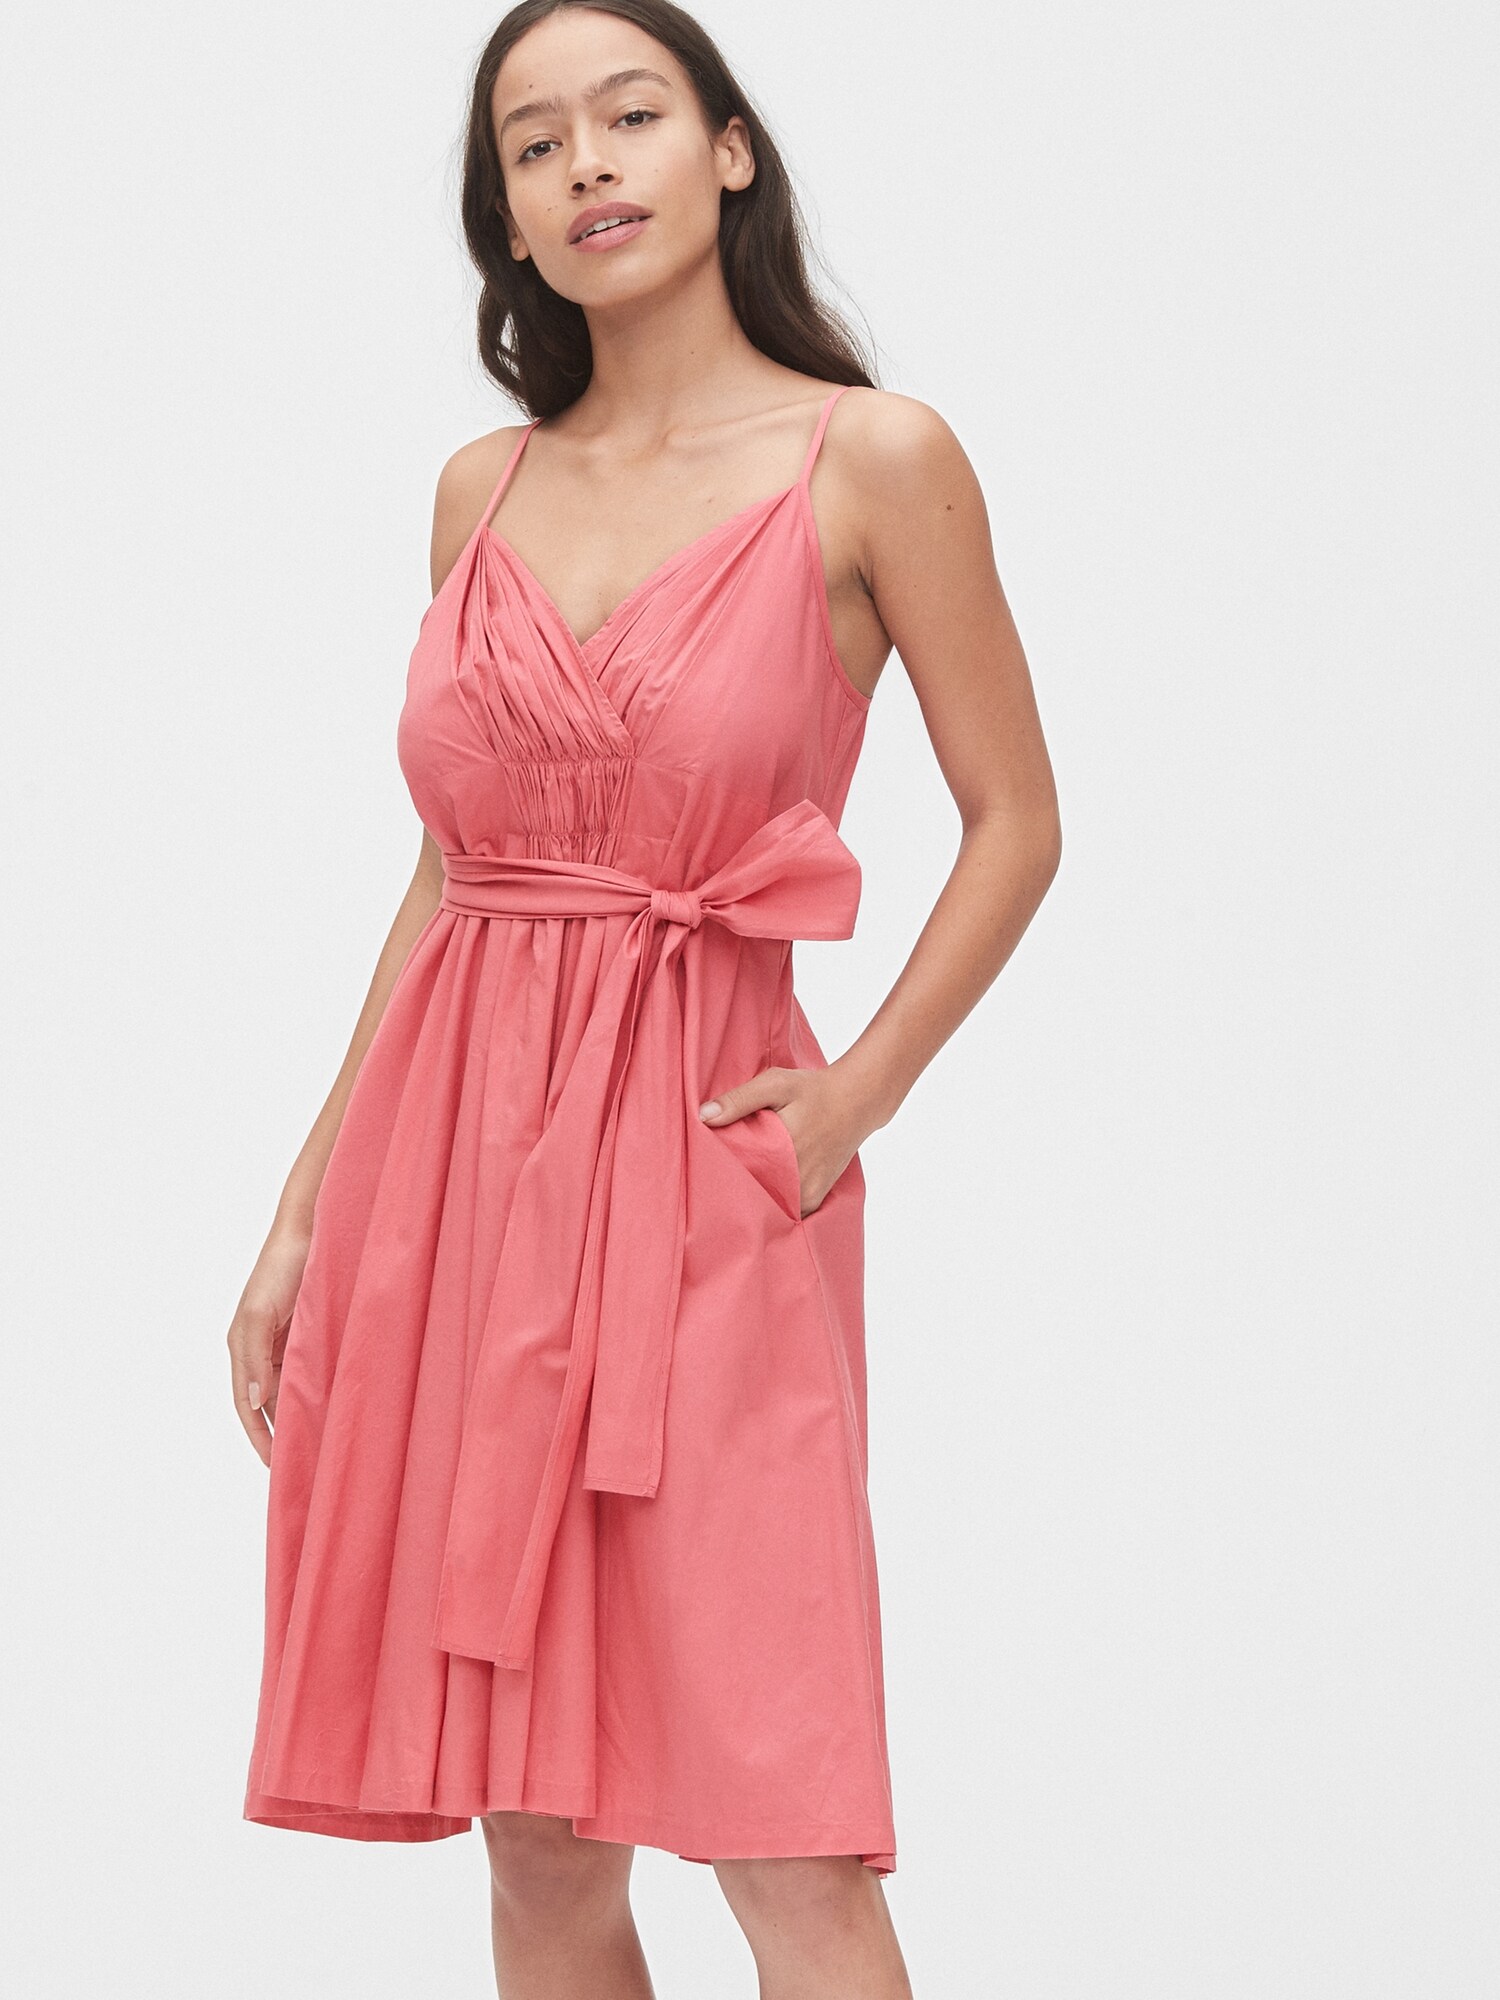 pink gap dress